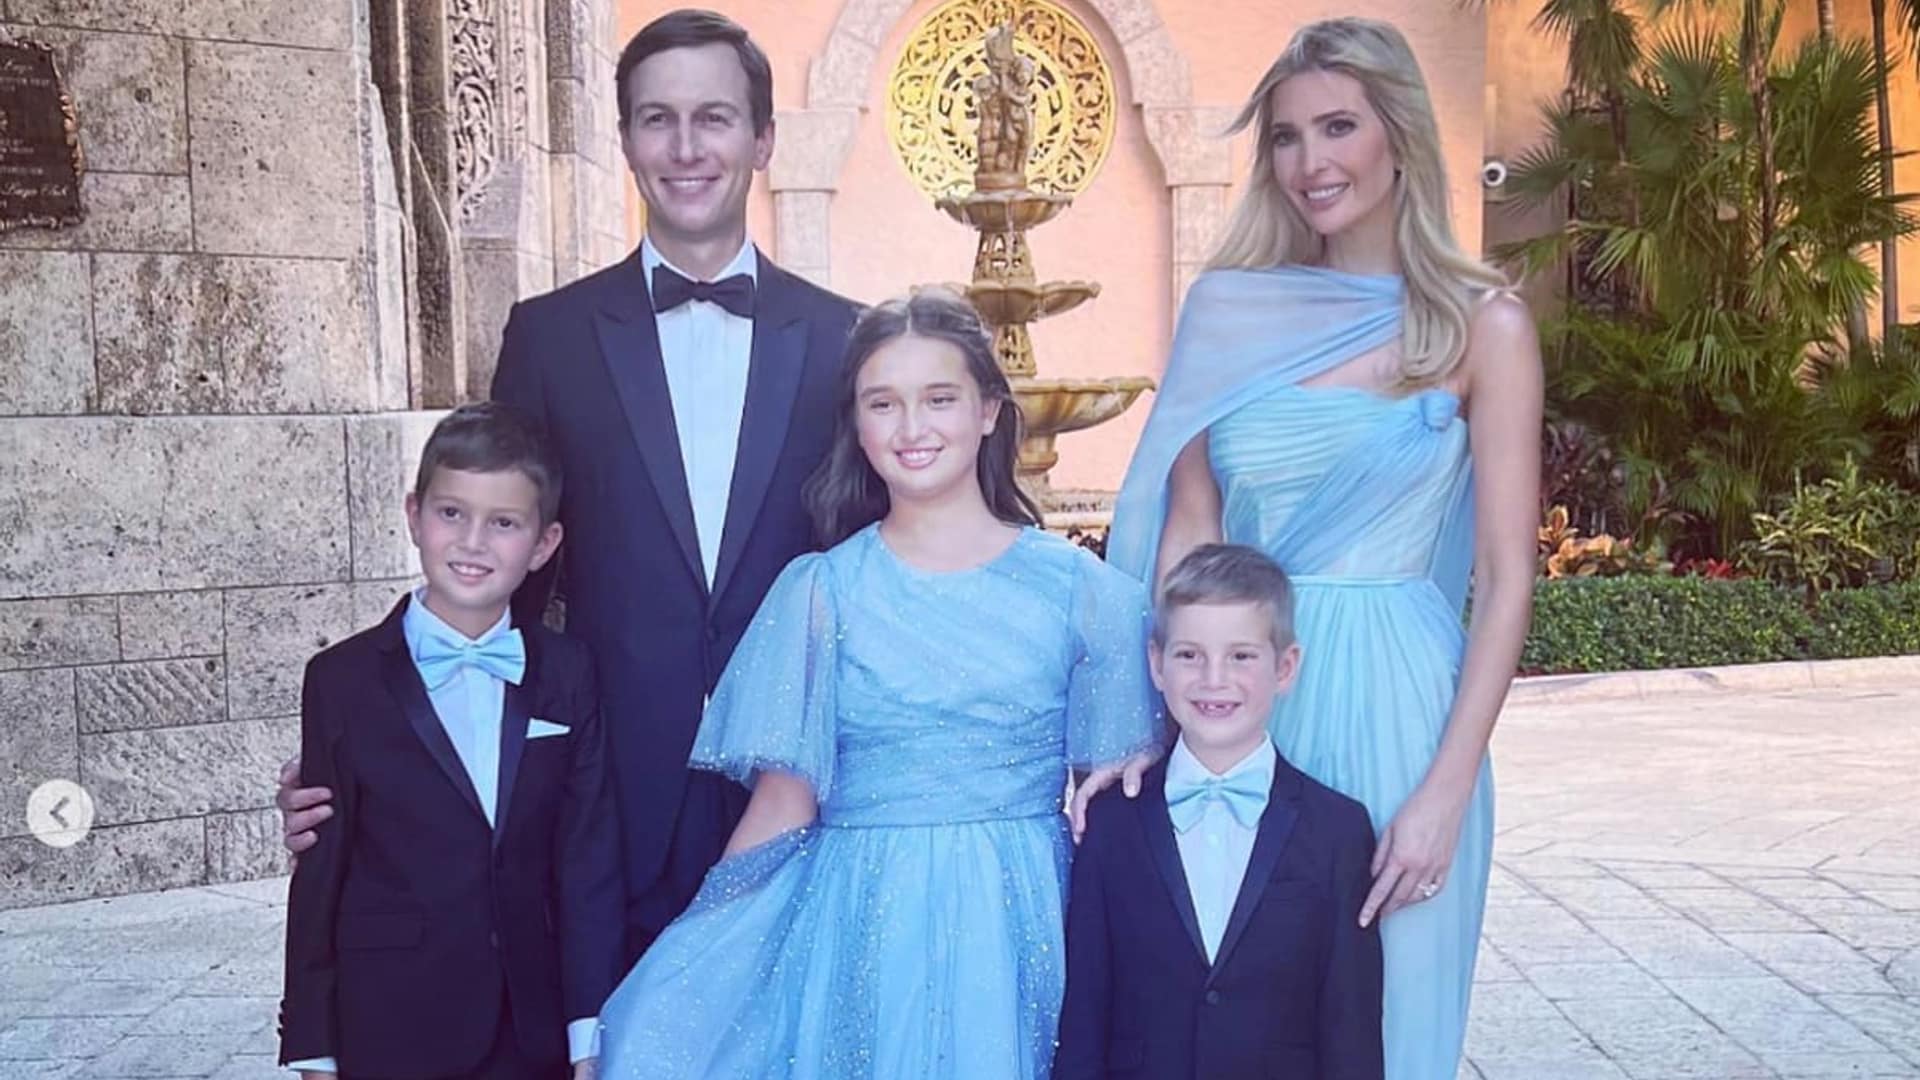 Ivanka Trump and her family at Tiffany Trump's wedding